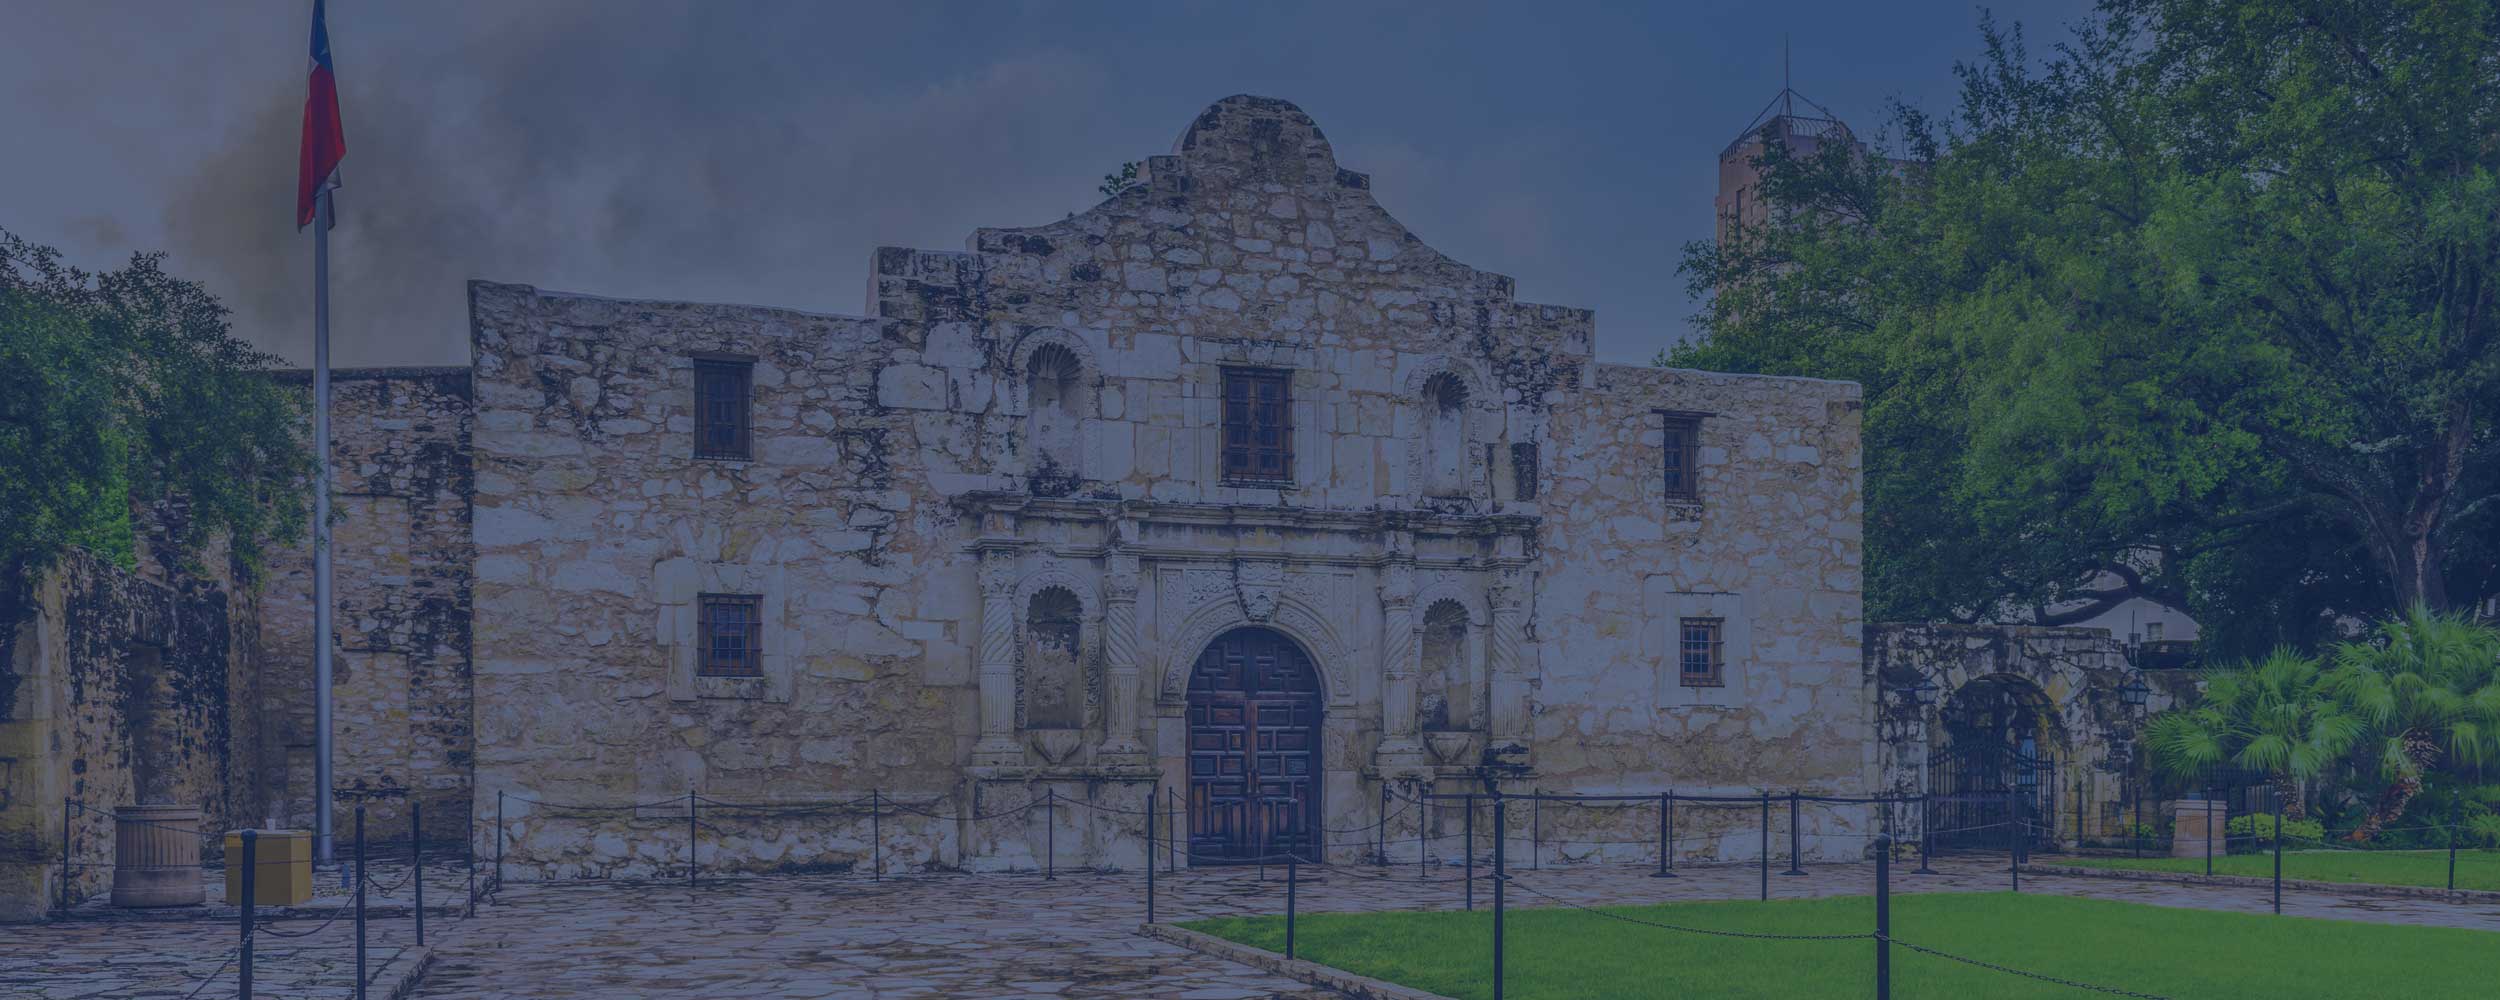 San Antonio Business Law Firm - The Alamo